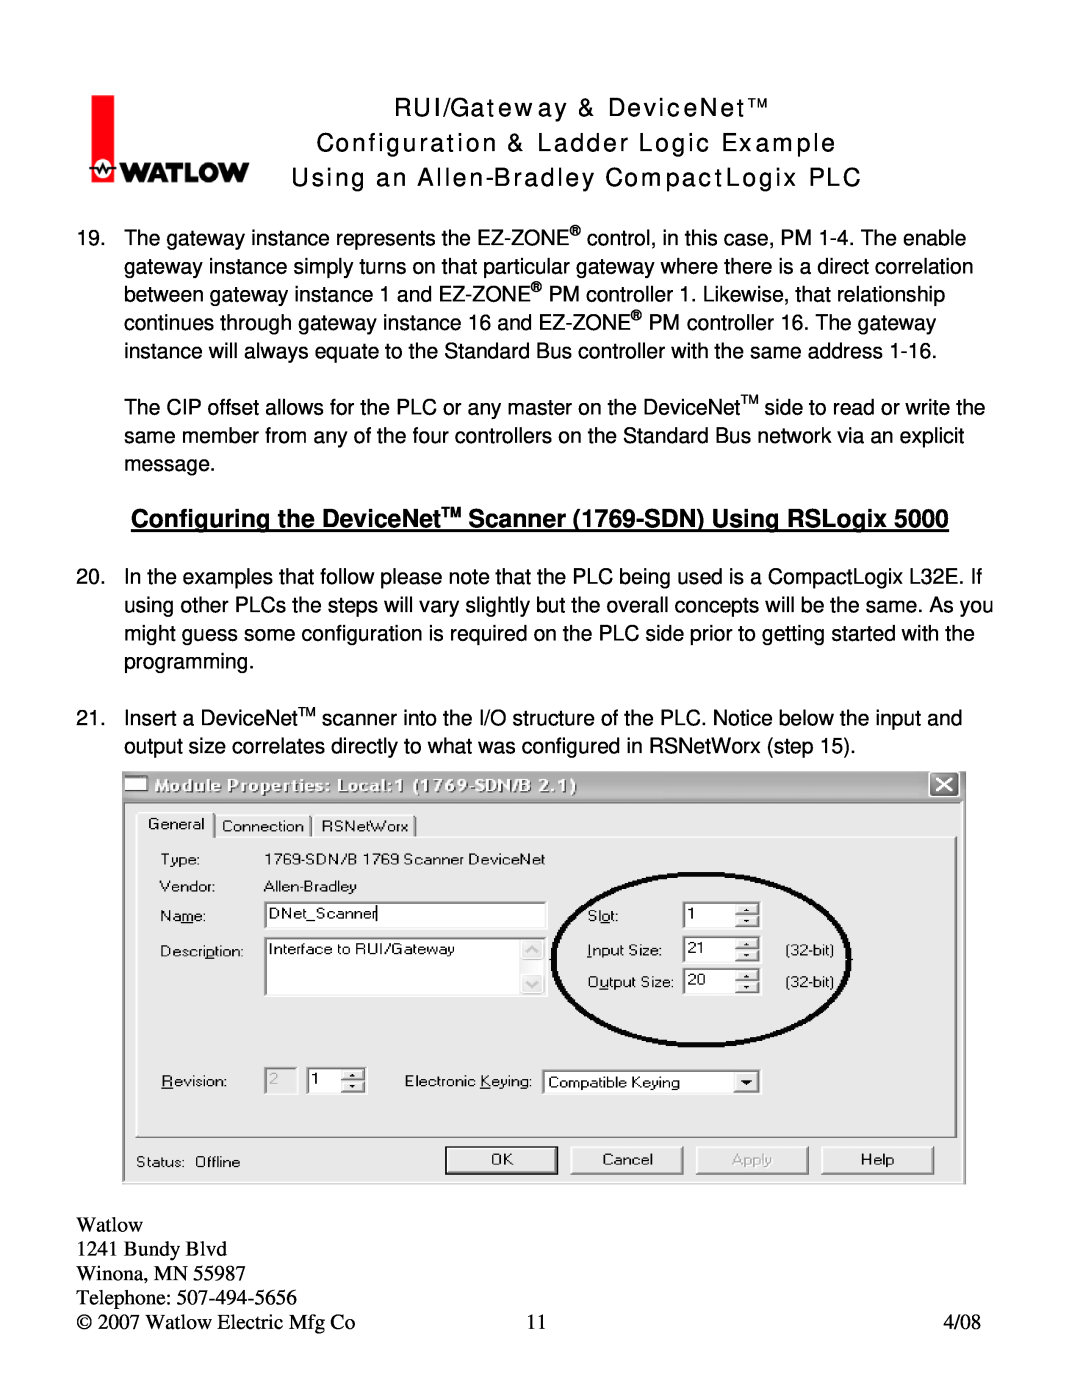 Watlow Electric Gateway & DeviceNet manual Configuring the DeviceNetTM Scanner 1769-SDN Using RSLogix 